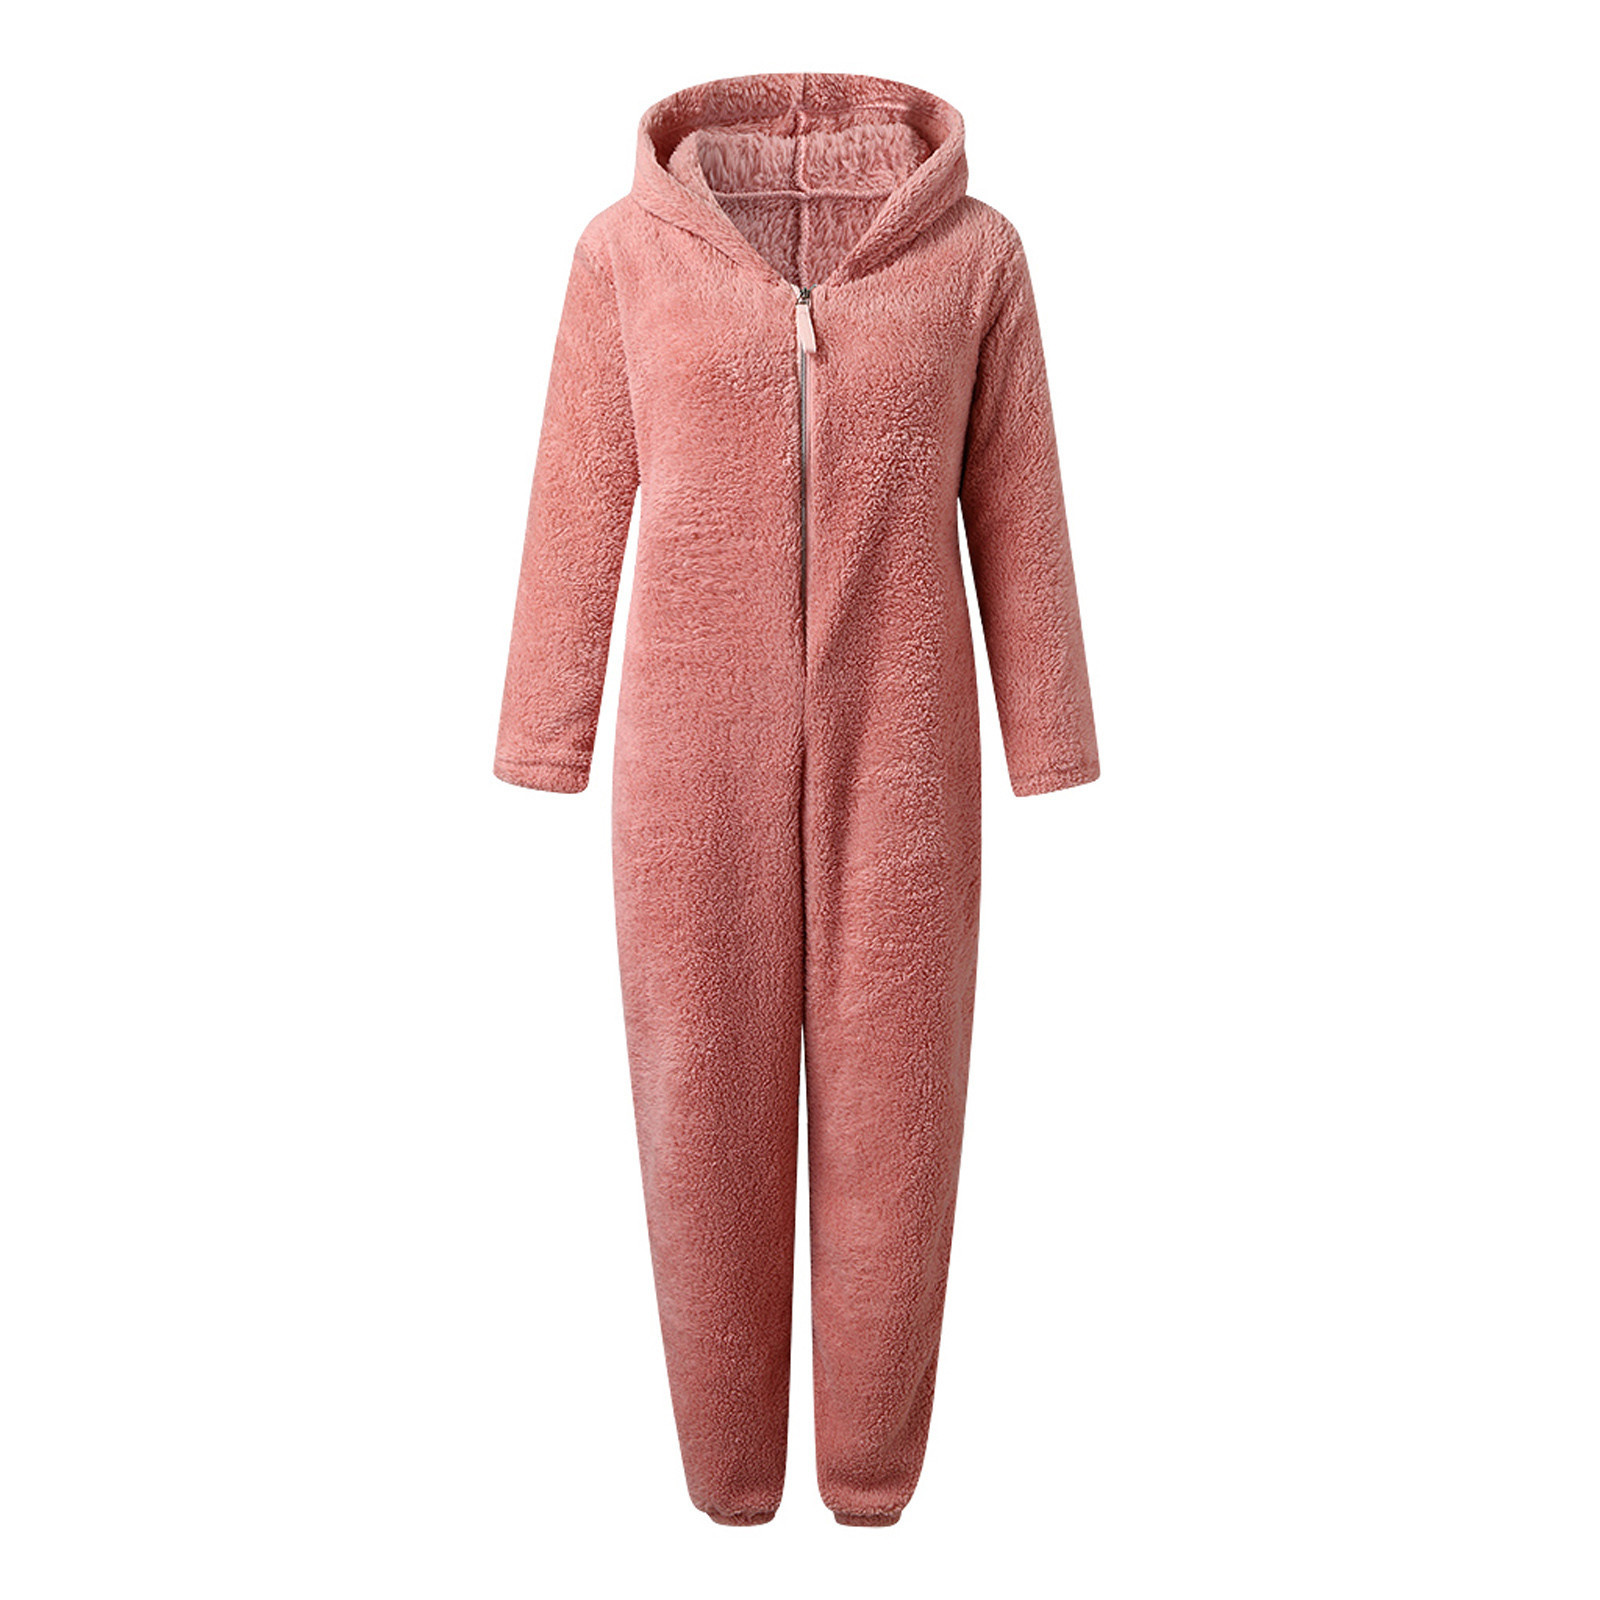 Jsaierl Women Onesies Fluffy Fleece Jumpsuits Sleepwear Plus Size Hood Sets Pajamas For Adult